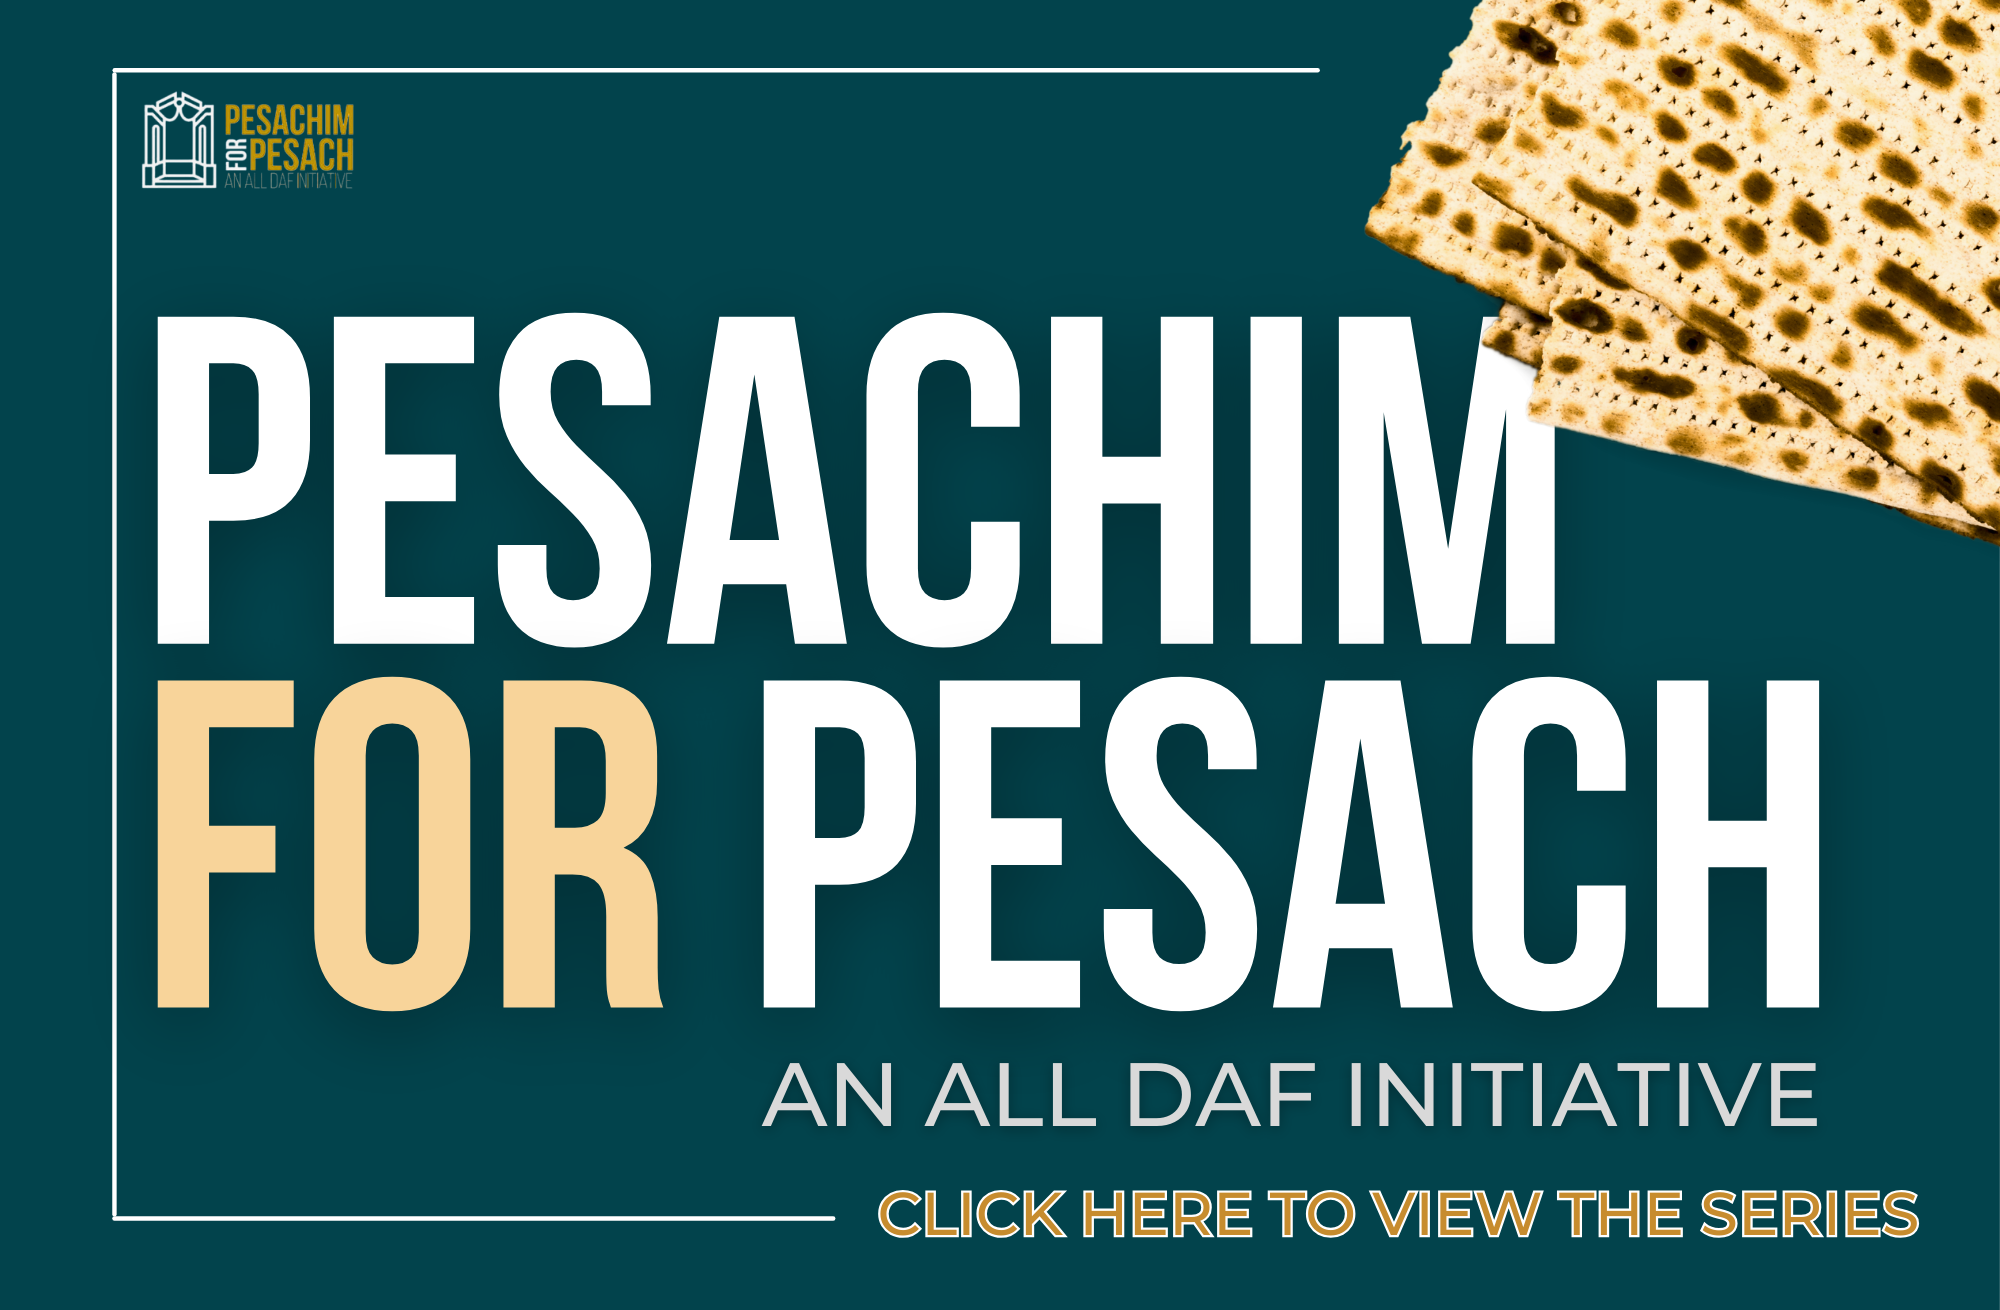 Pesachim for Pesach